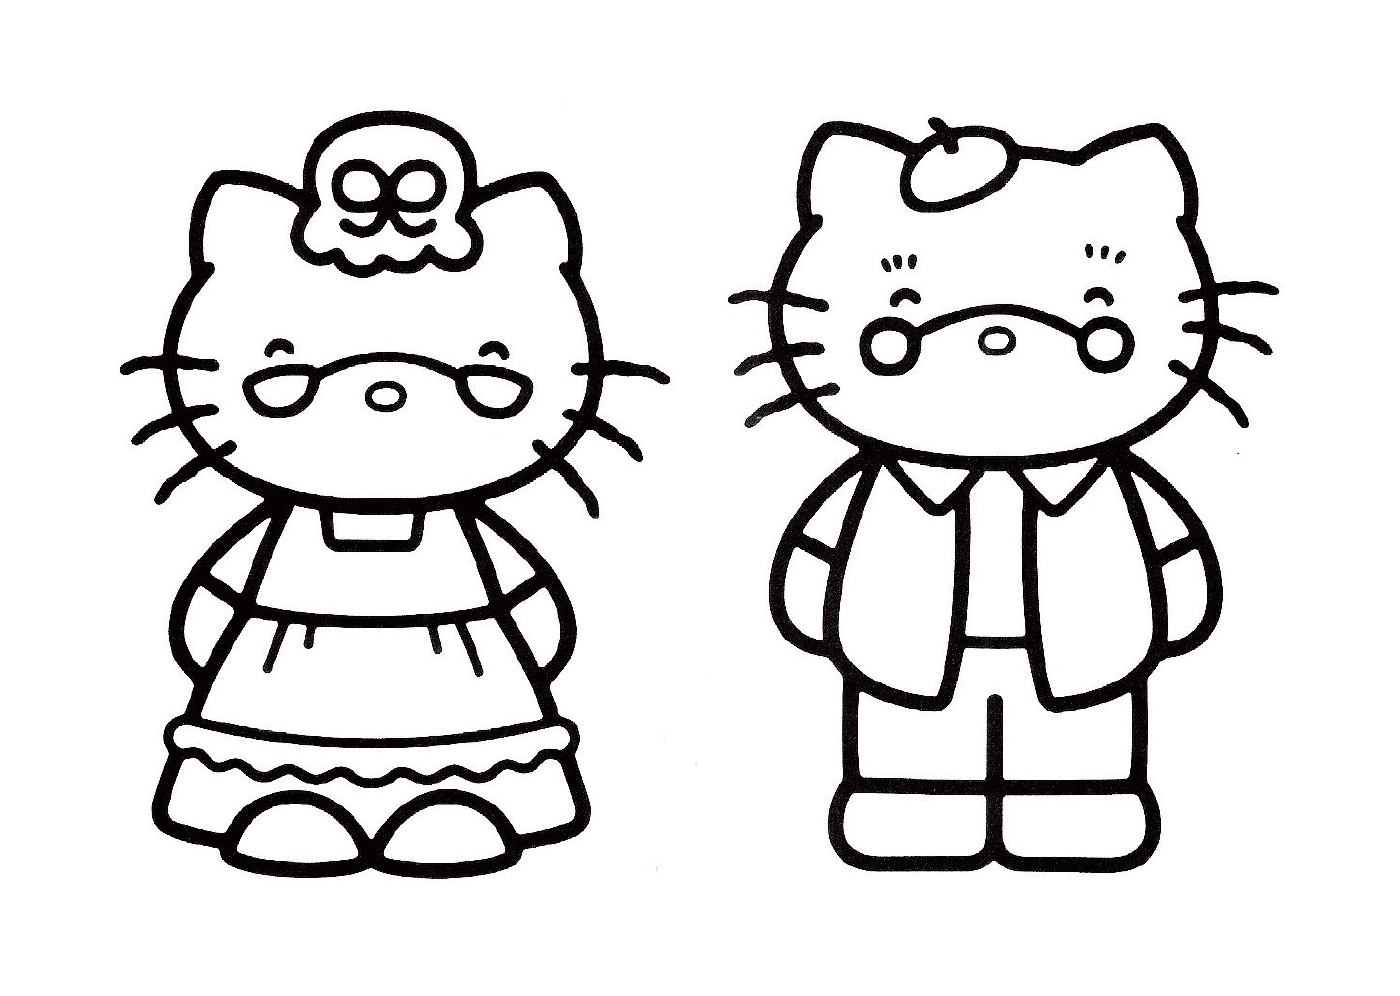  Dois personagens da Hello Kitty 